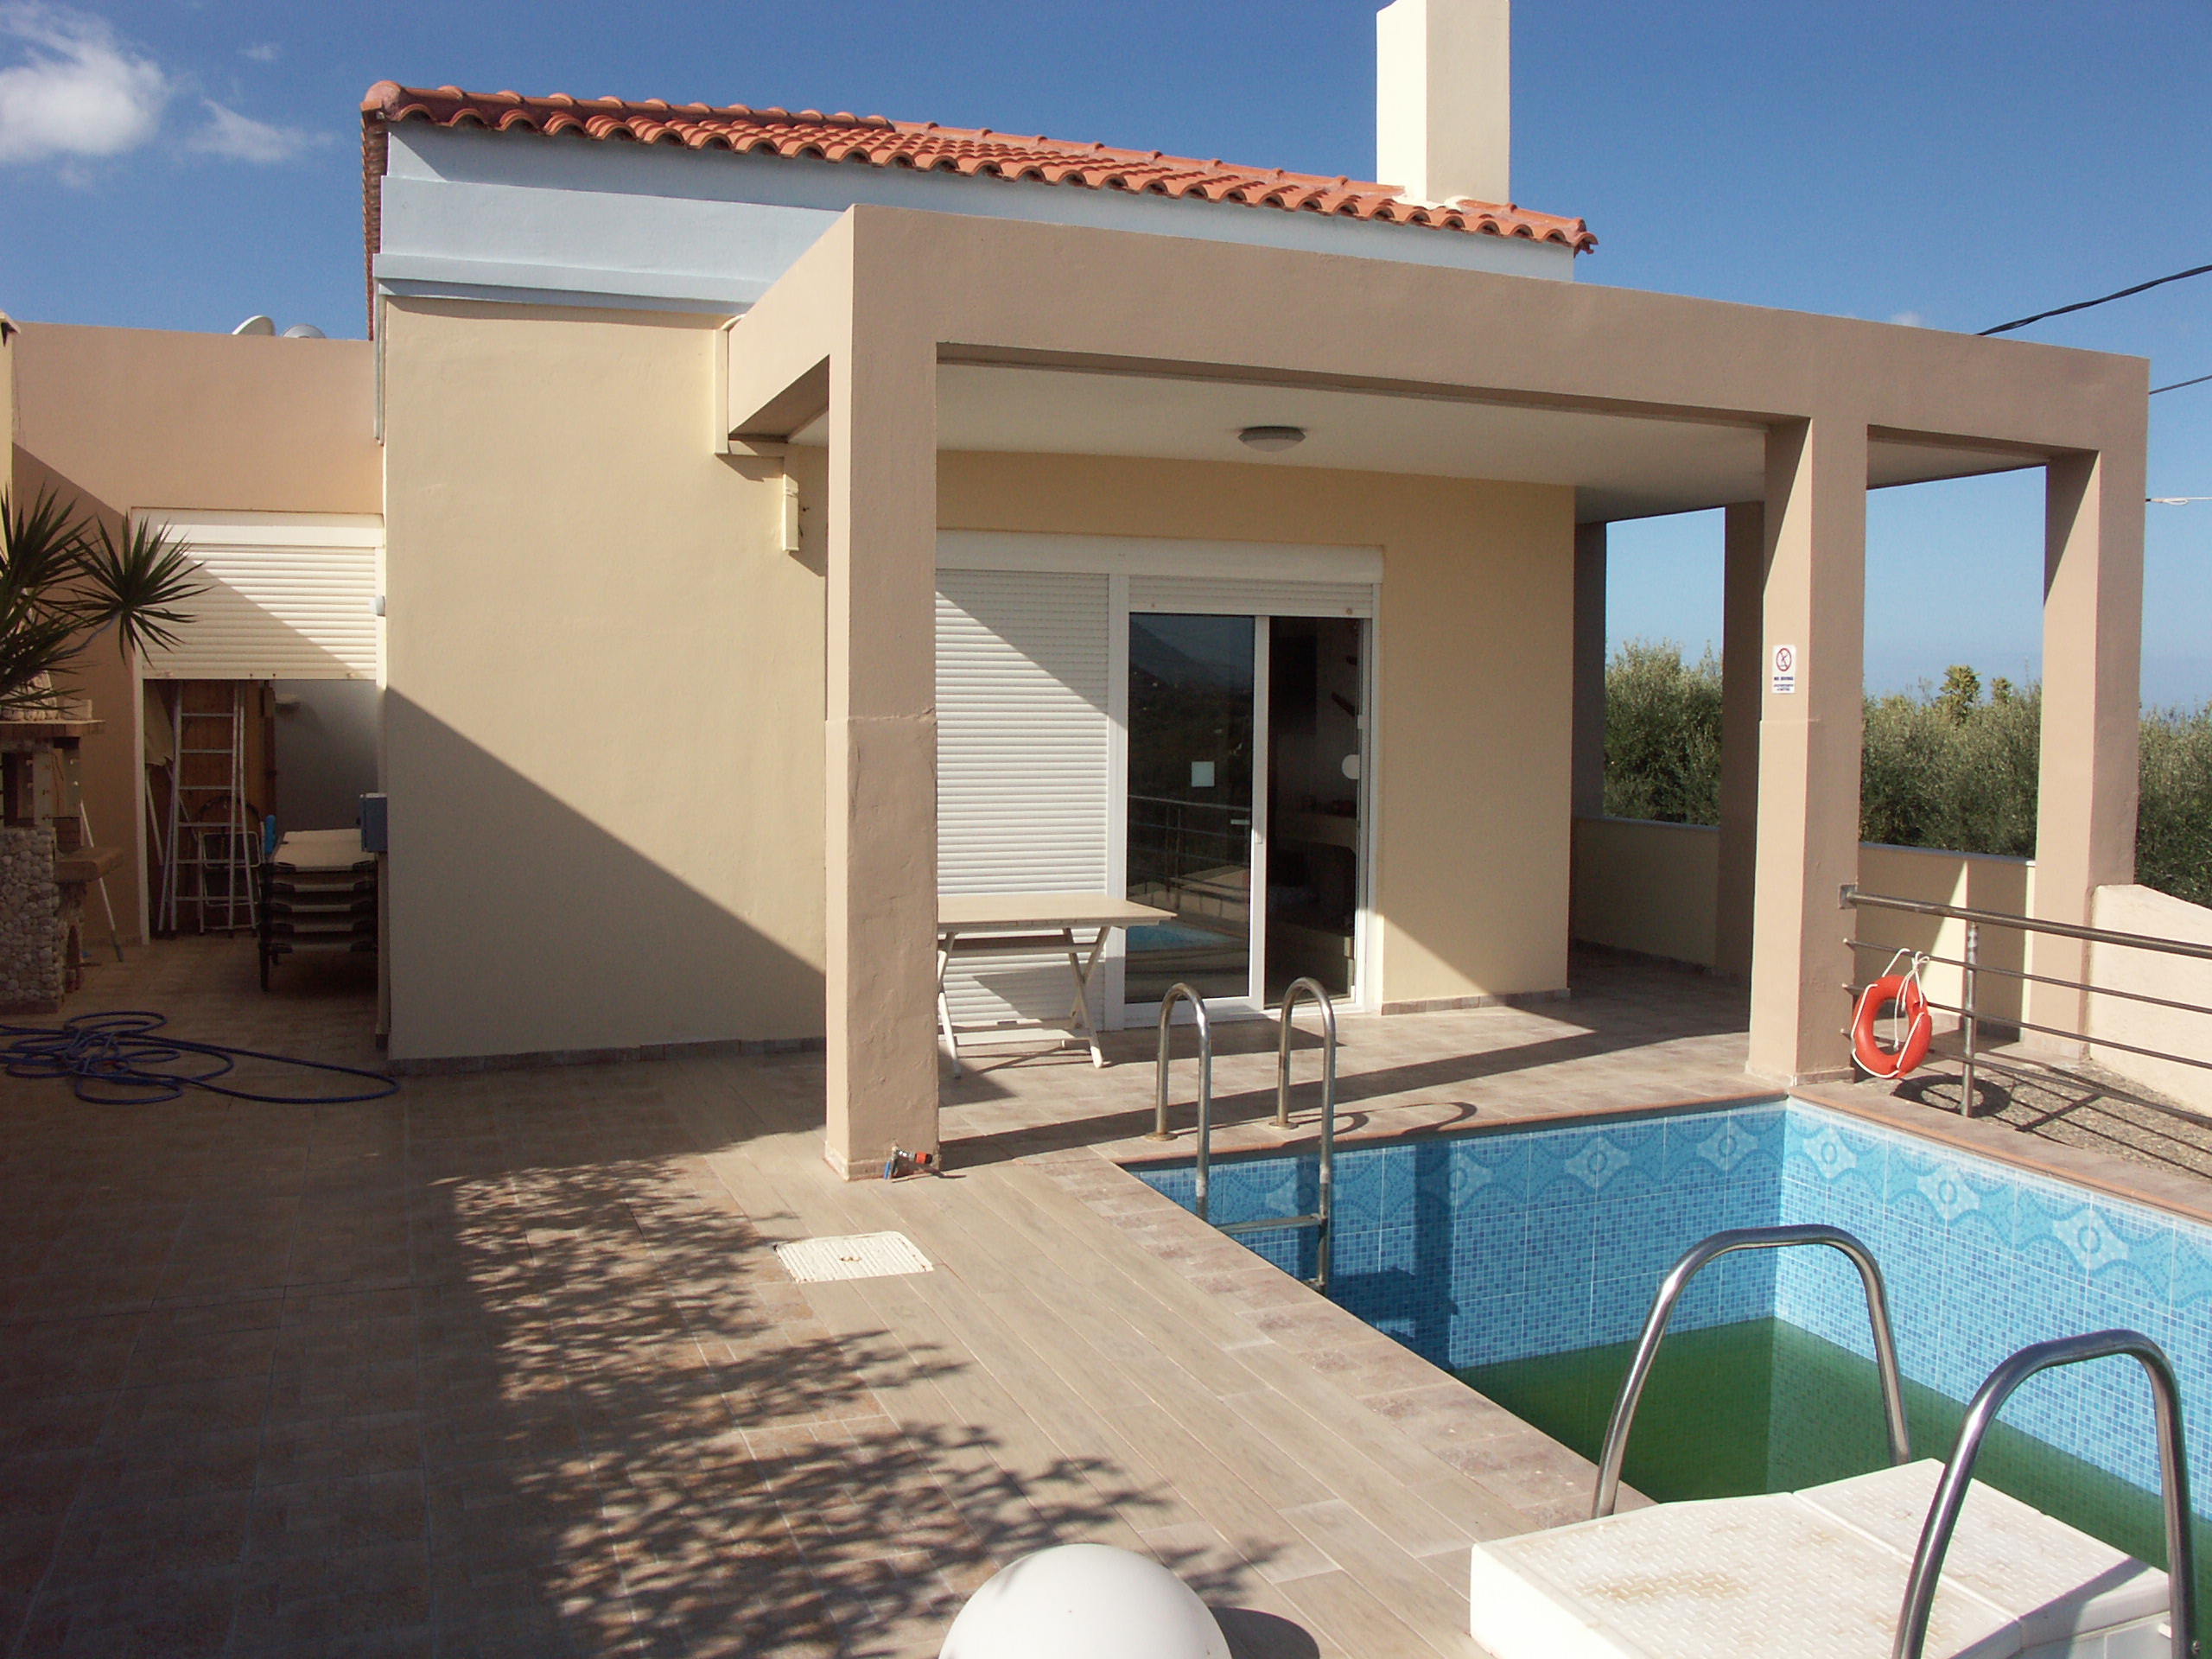 230 sq.m. Villa in Prinos, Crete | Rentals | Sales | Real Estate